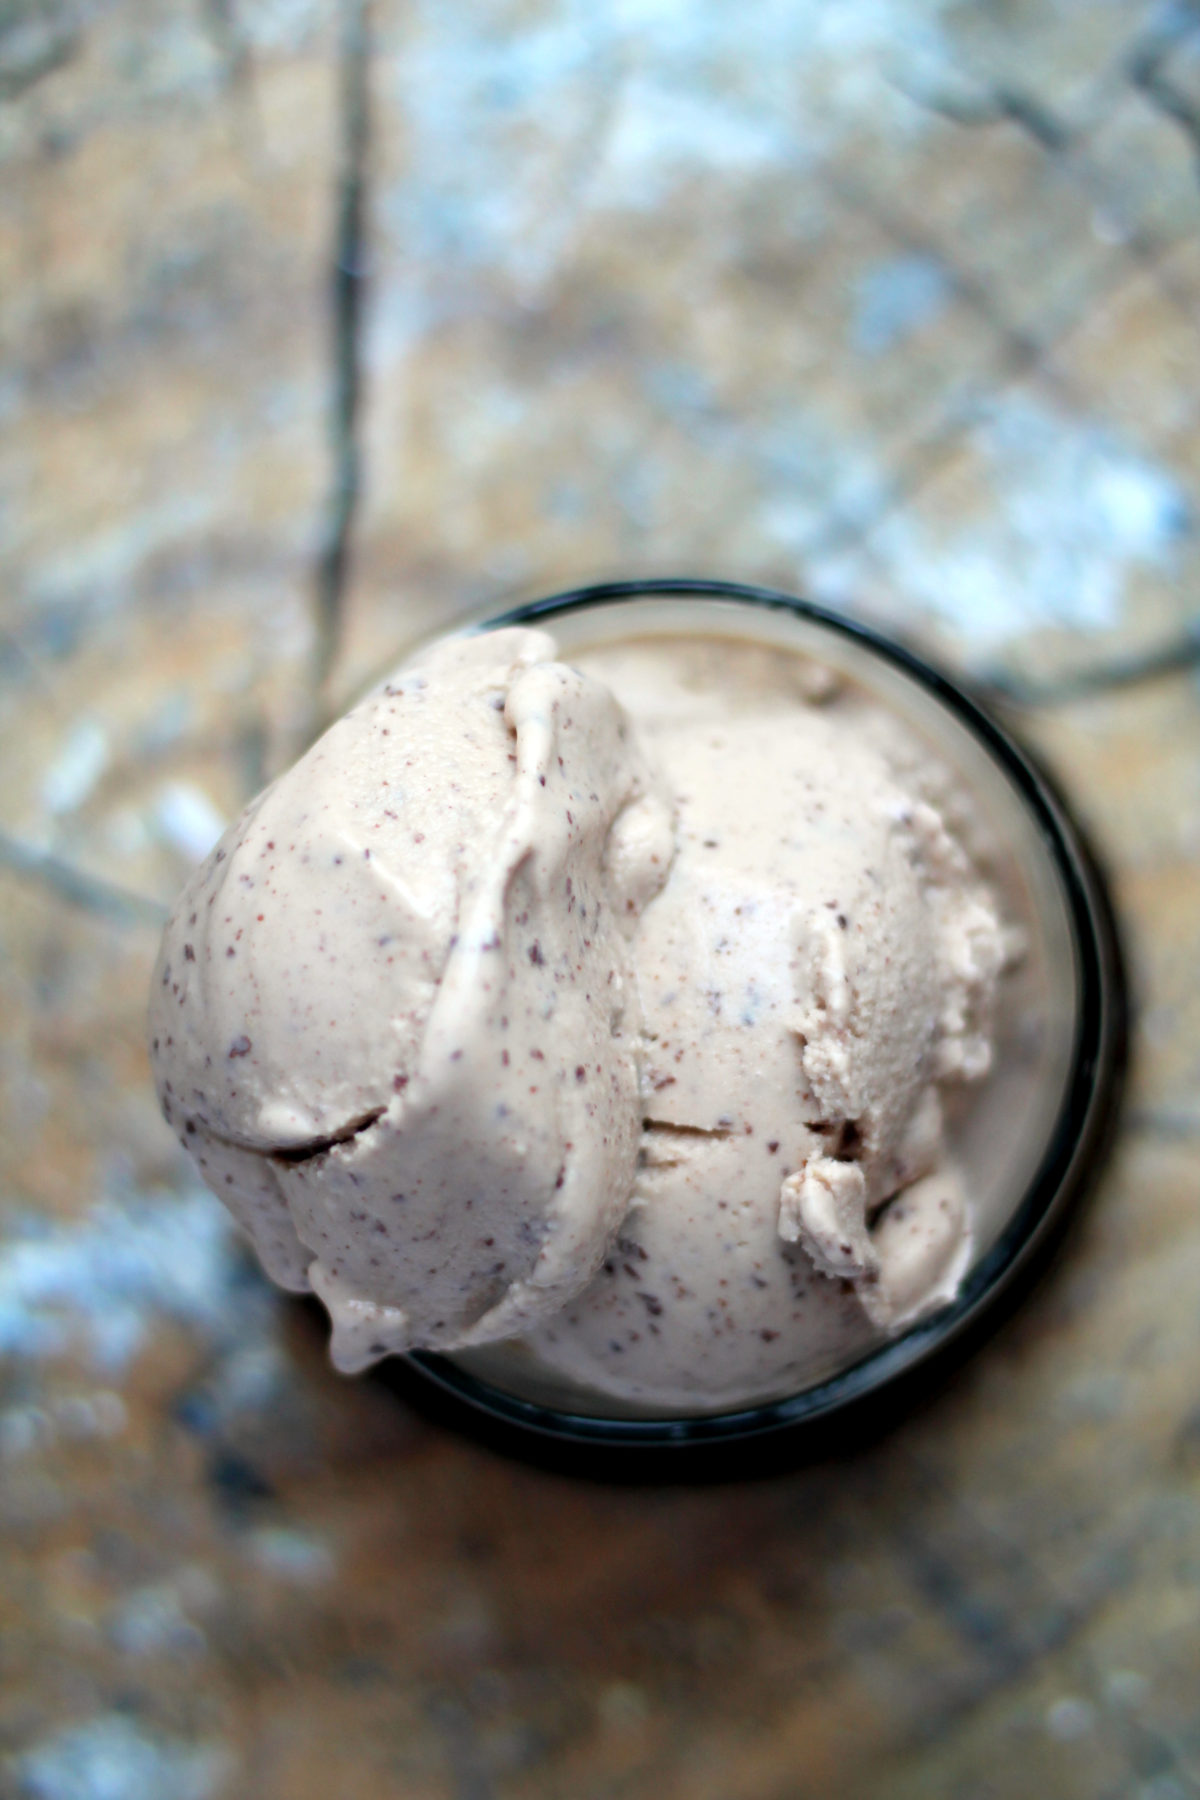 Easy to make peanut butter frozen yogurt with flecks of dark chocolate.